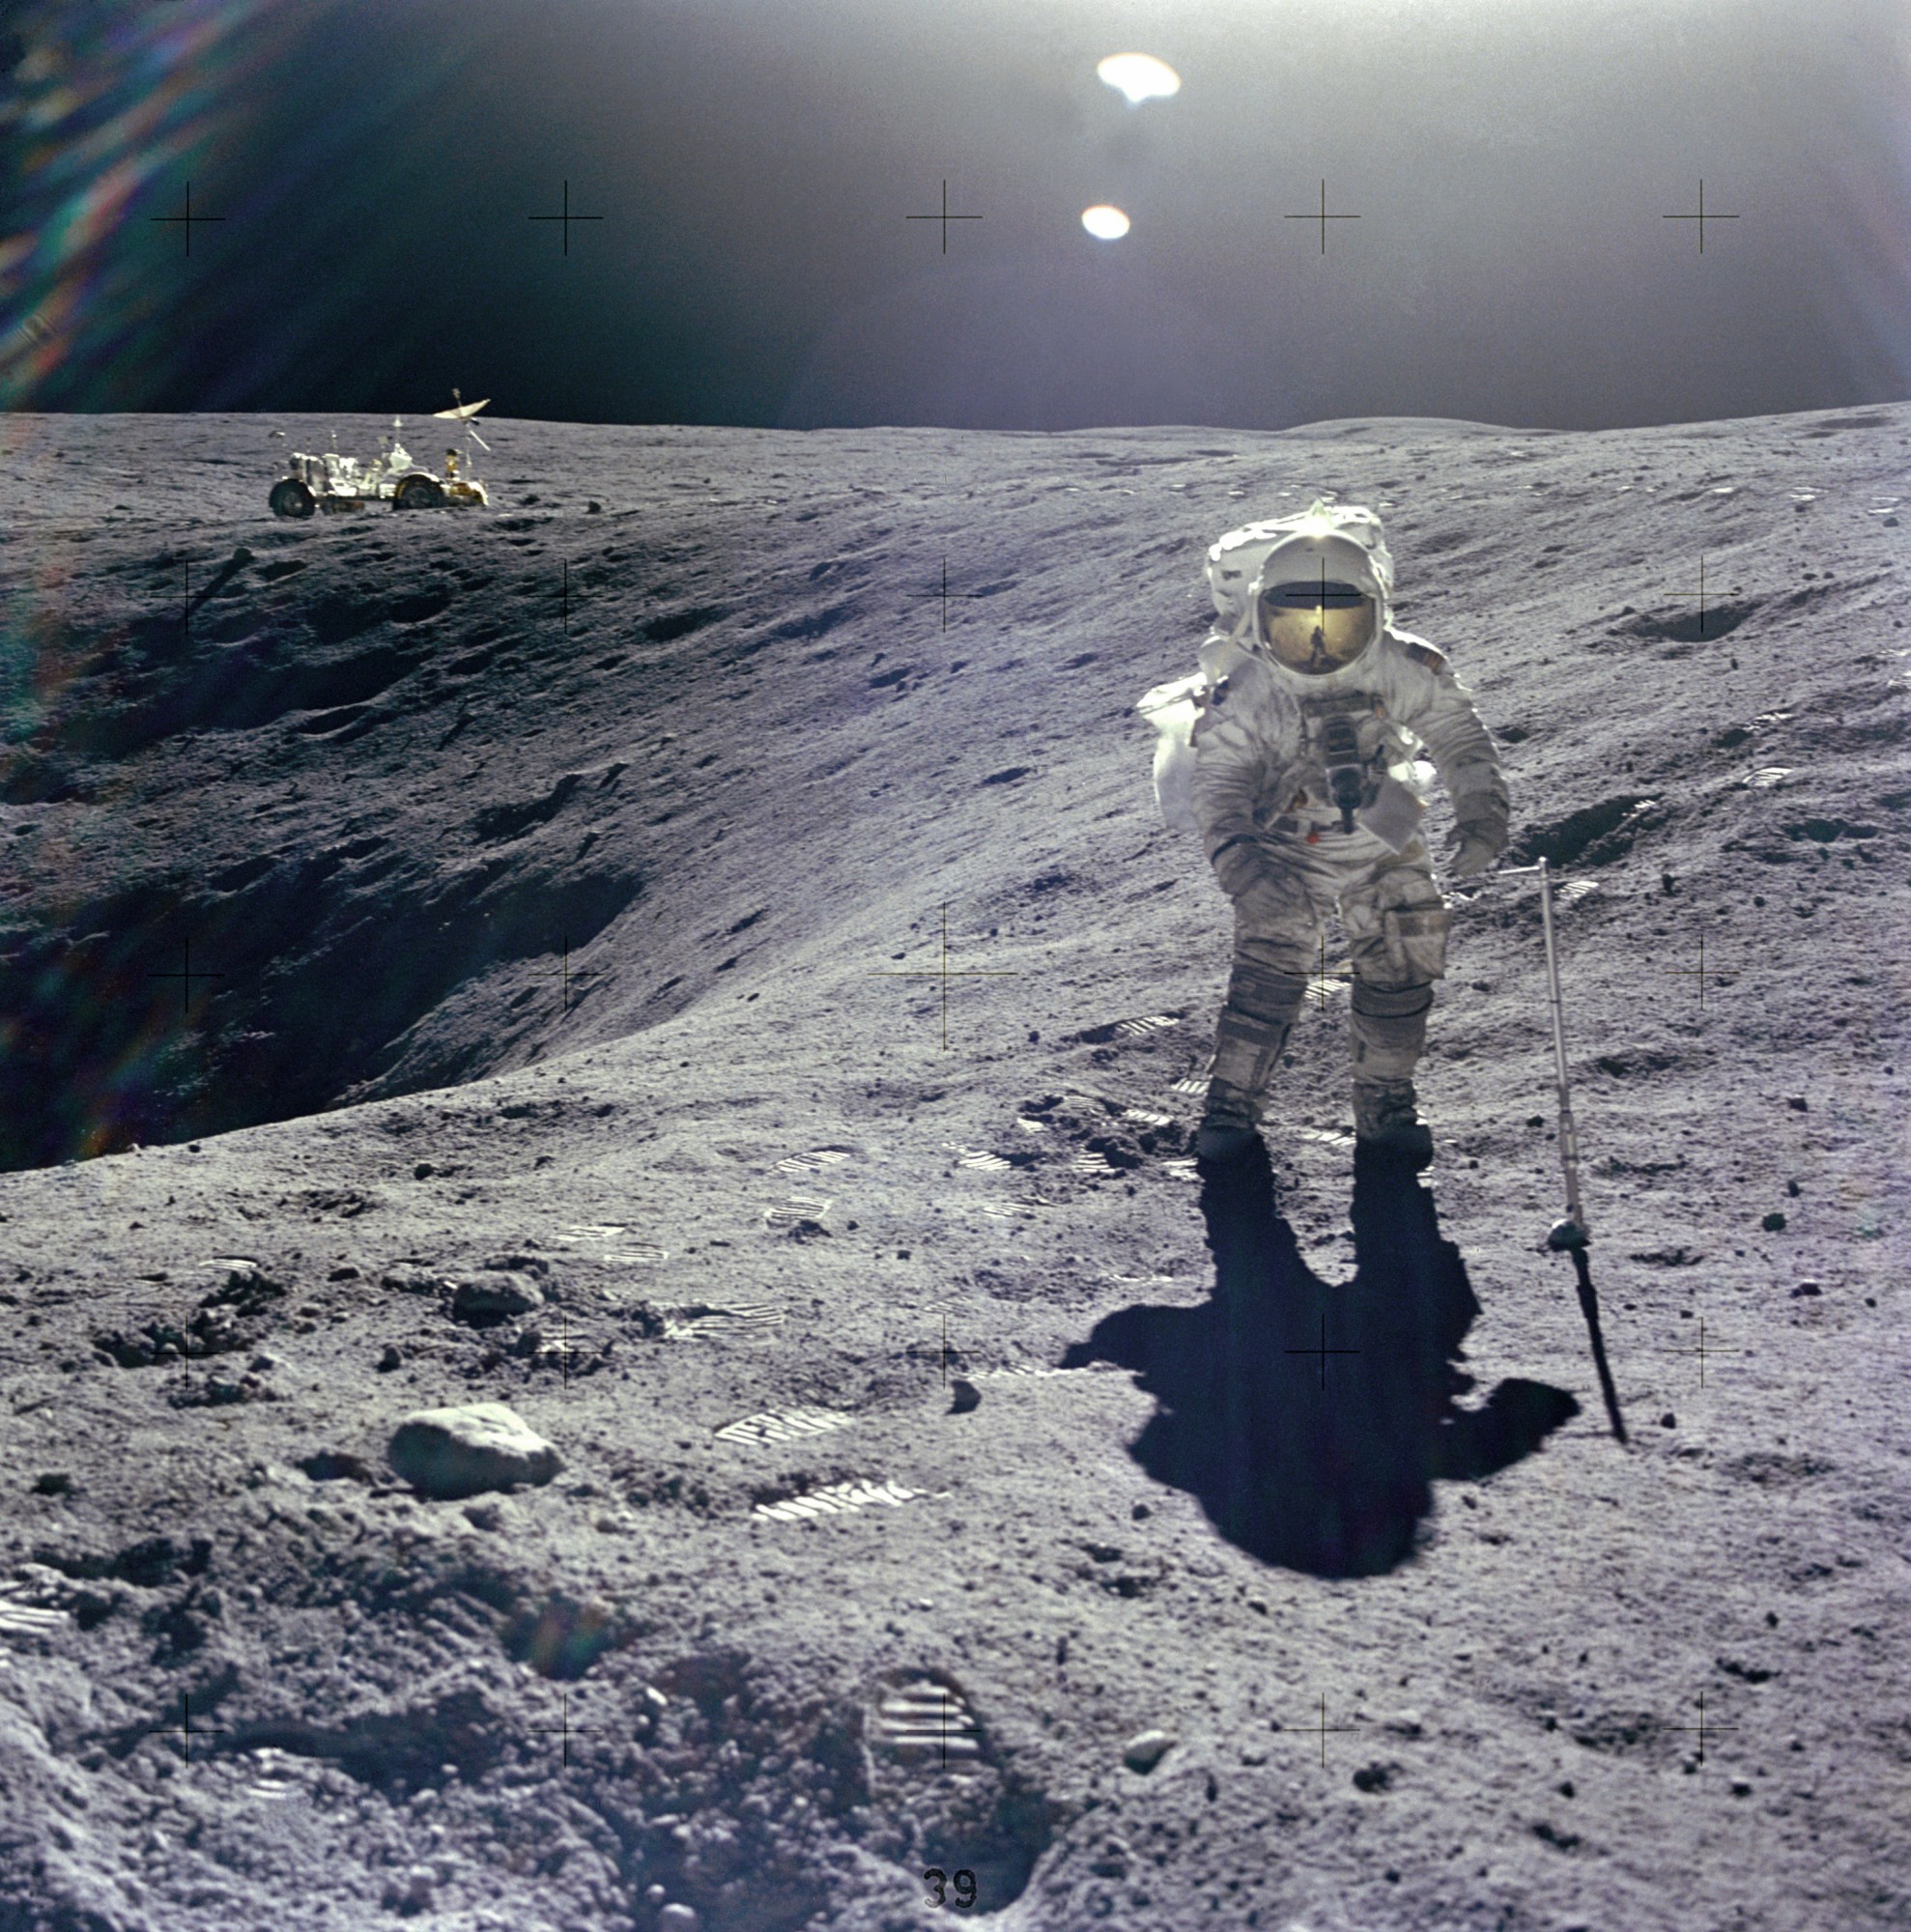 Duke_on_the_Craters_Edge_Foto NASA auf Wikipedia